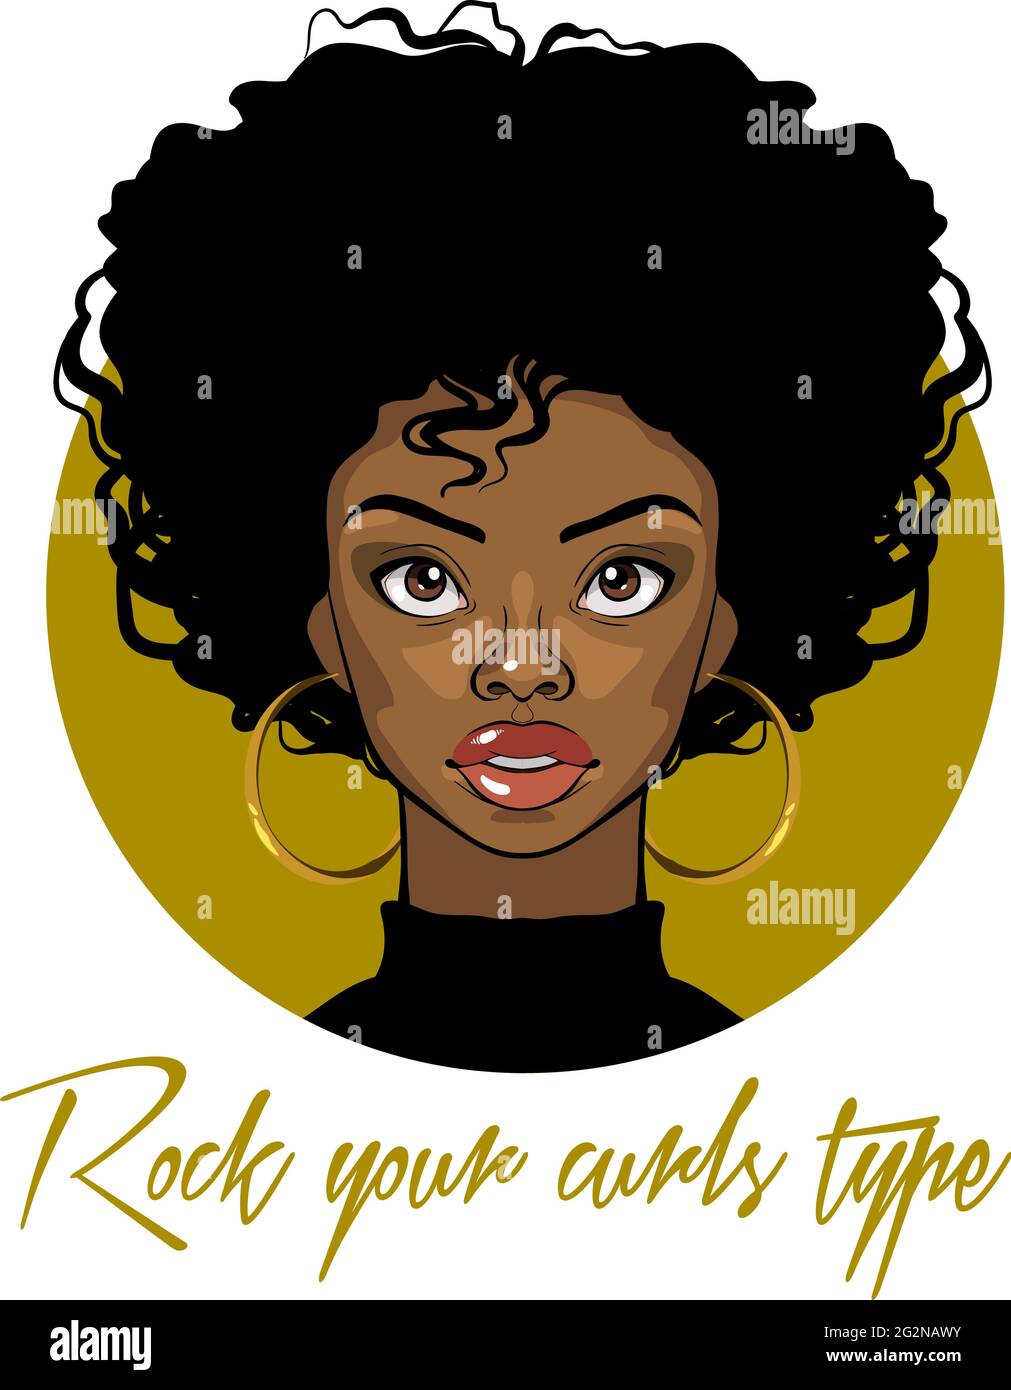 Black girl with afro hair cartoon